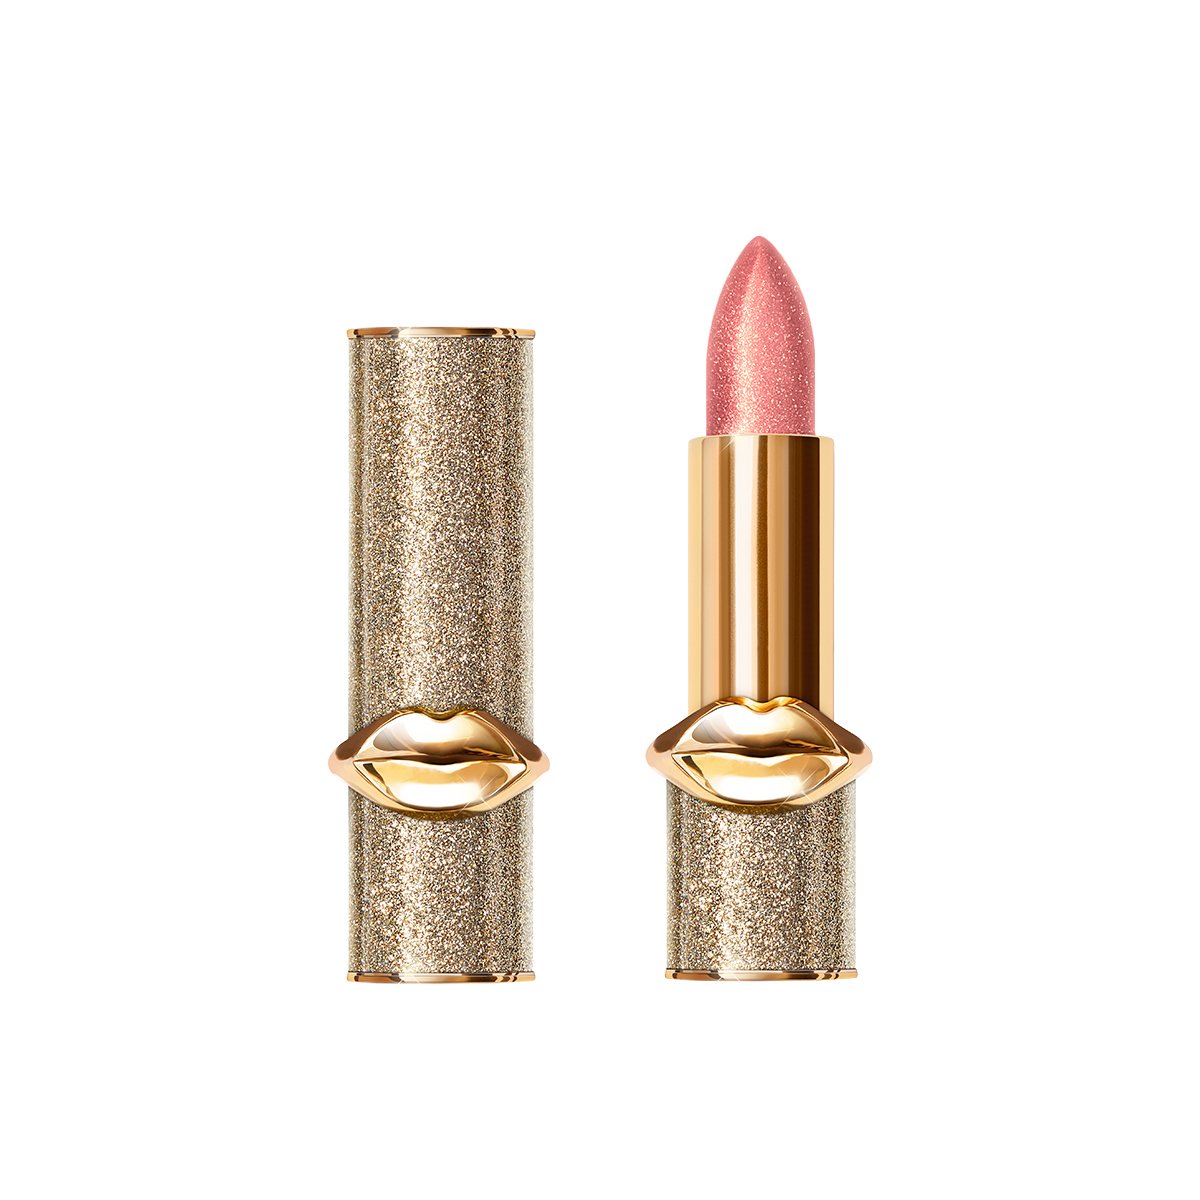 Pat McGrath BlitzTrance NUDE ROMANTIQUE Lipstick (Coral Rose with Golden Pink Pearl)